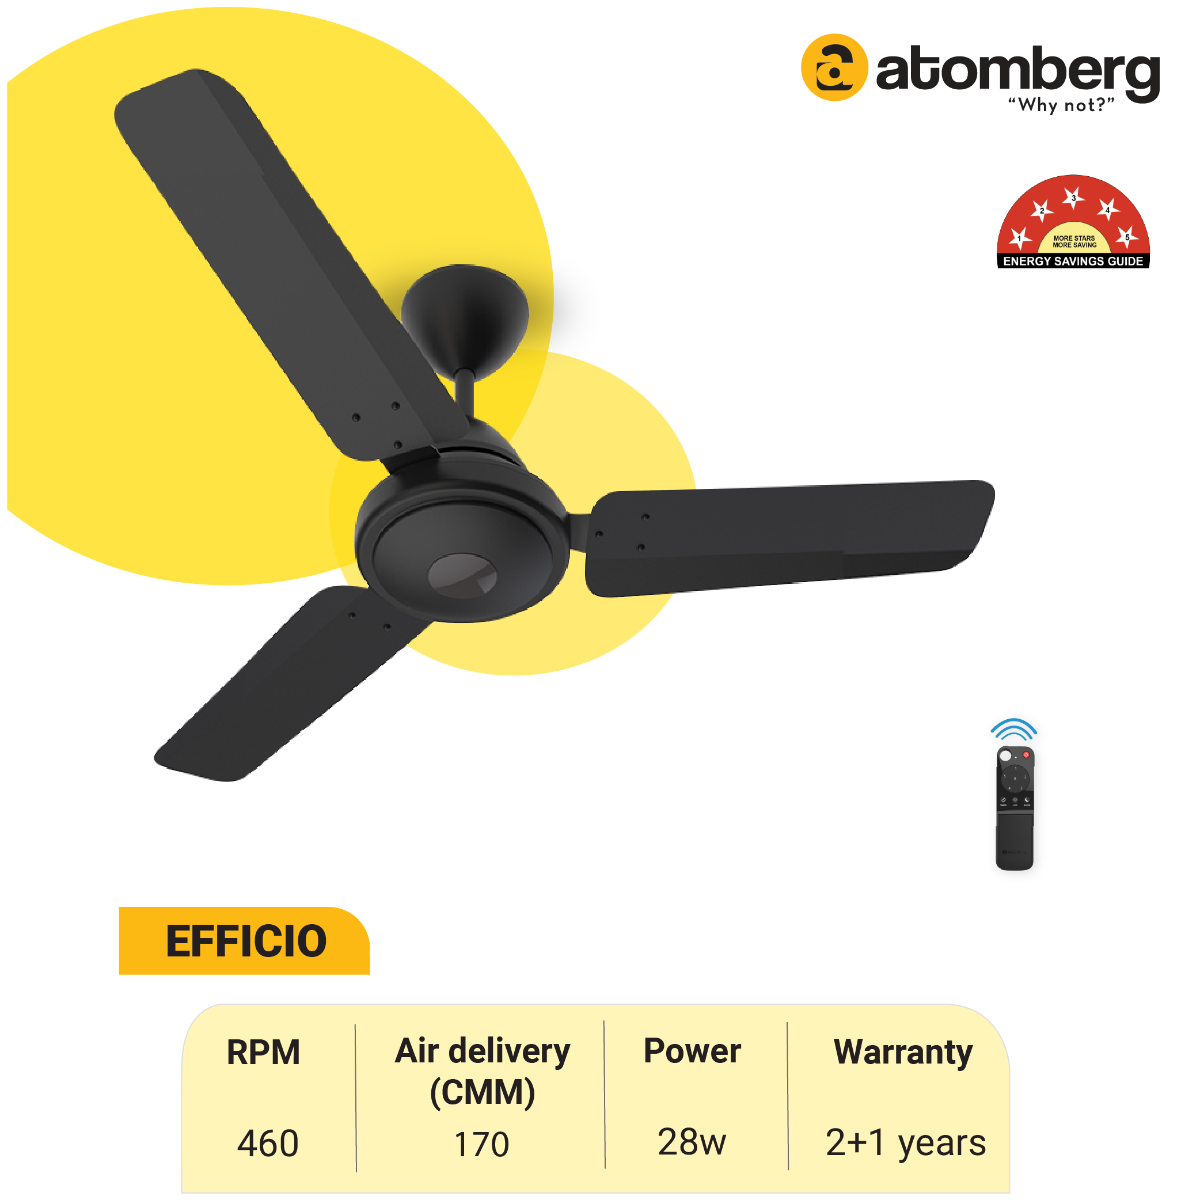 Atomberg Efficio 900 mm BLDC Motor with Remote 3 Blade Ceiling Fan Matt Black Pack of 1